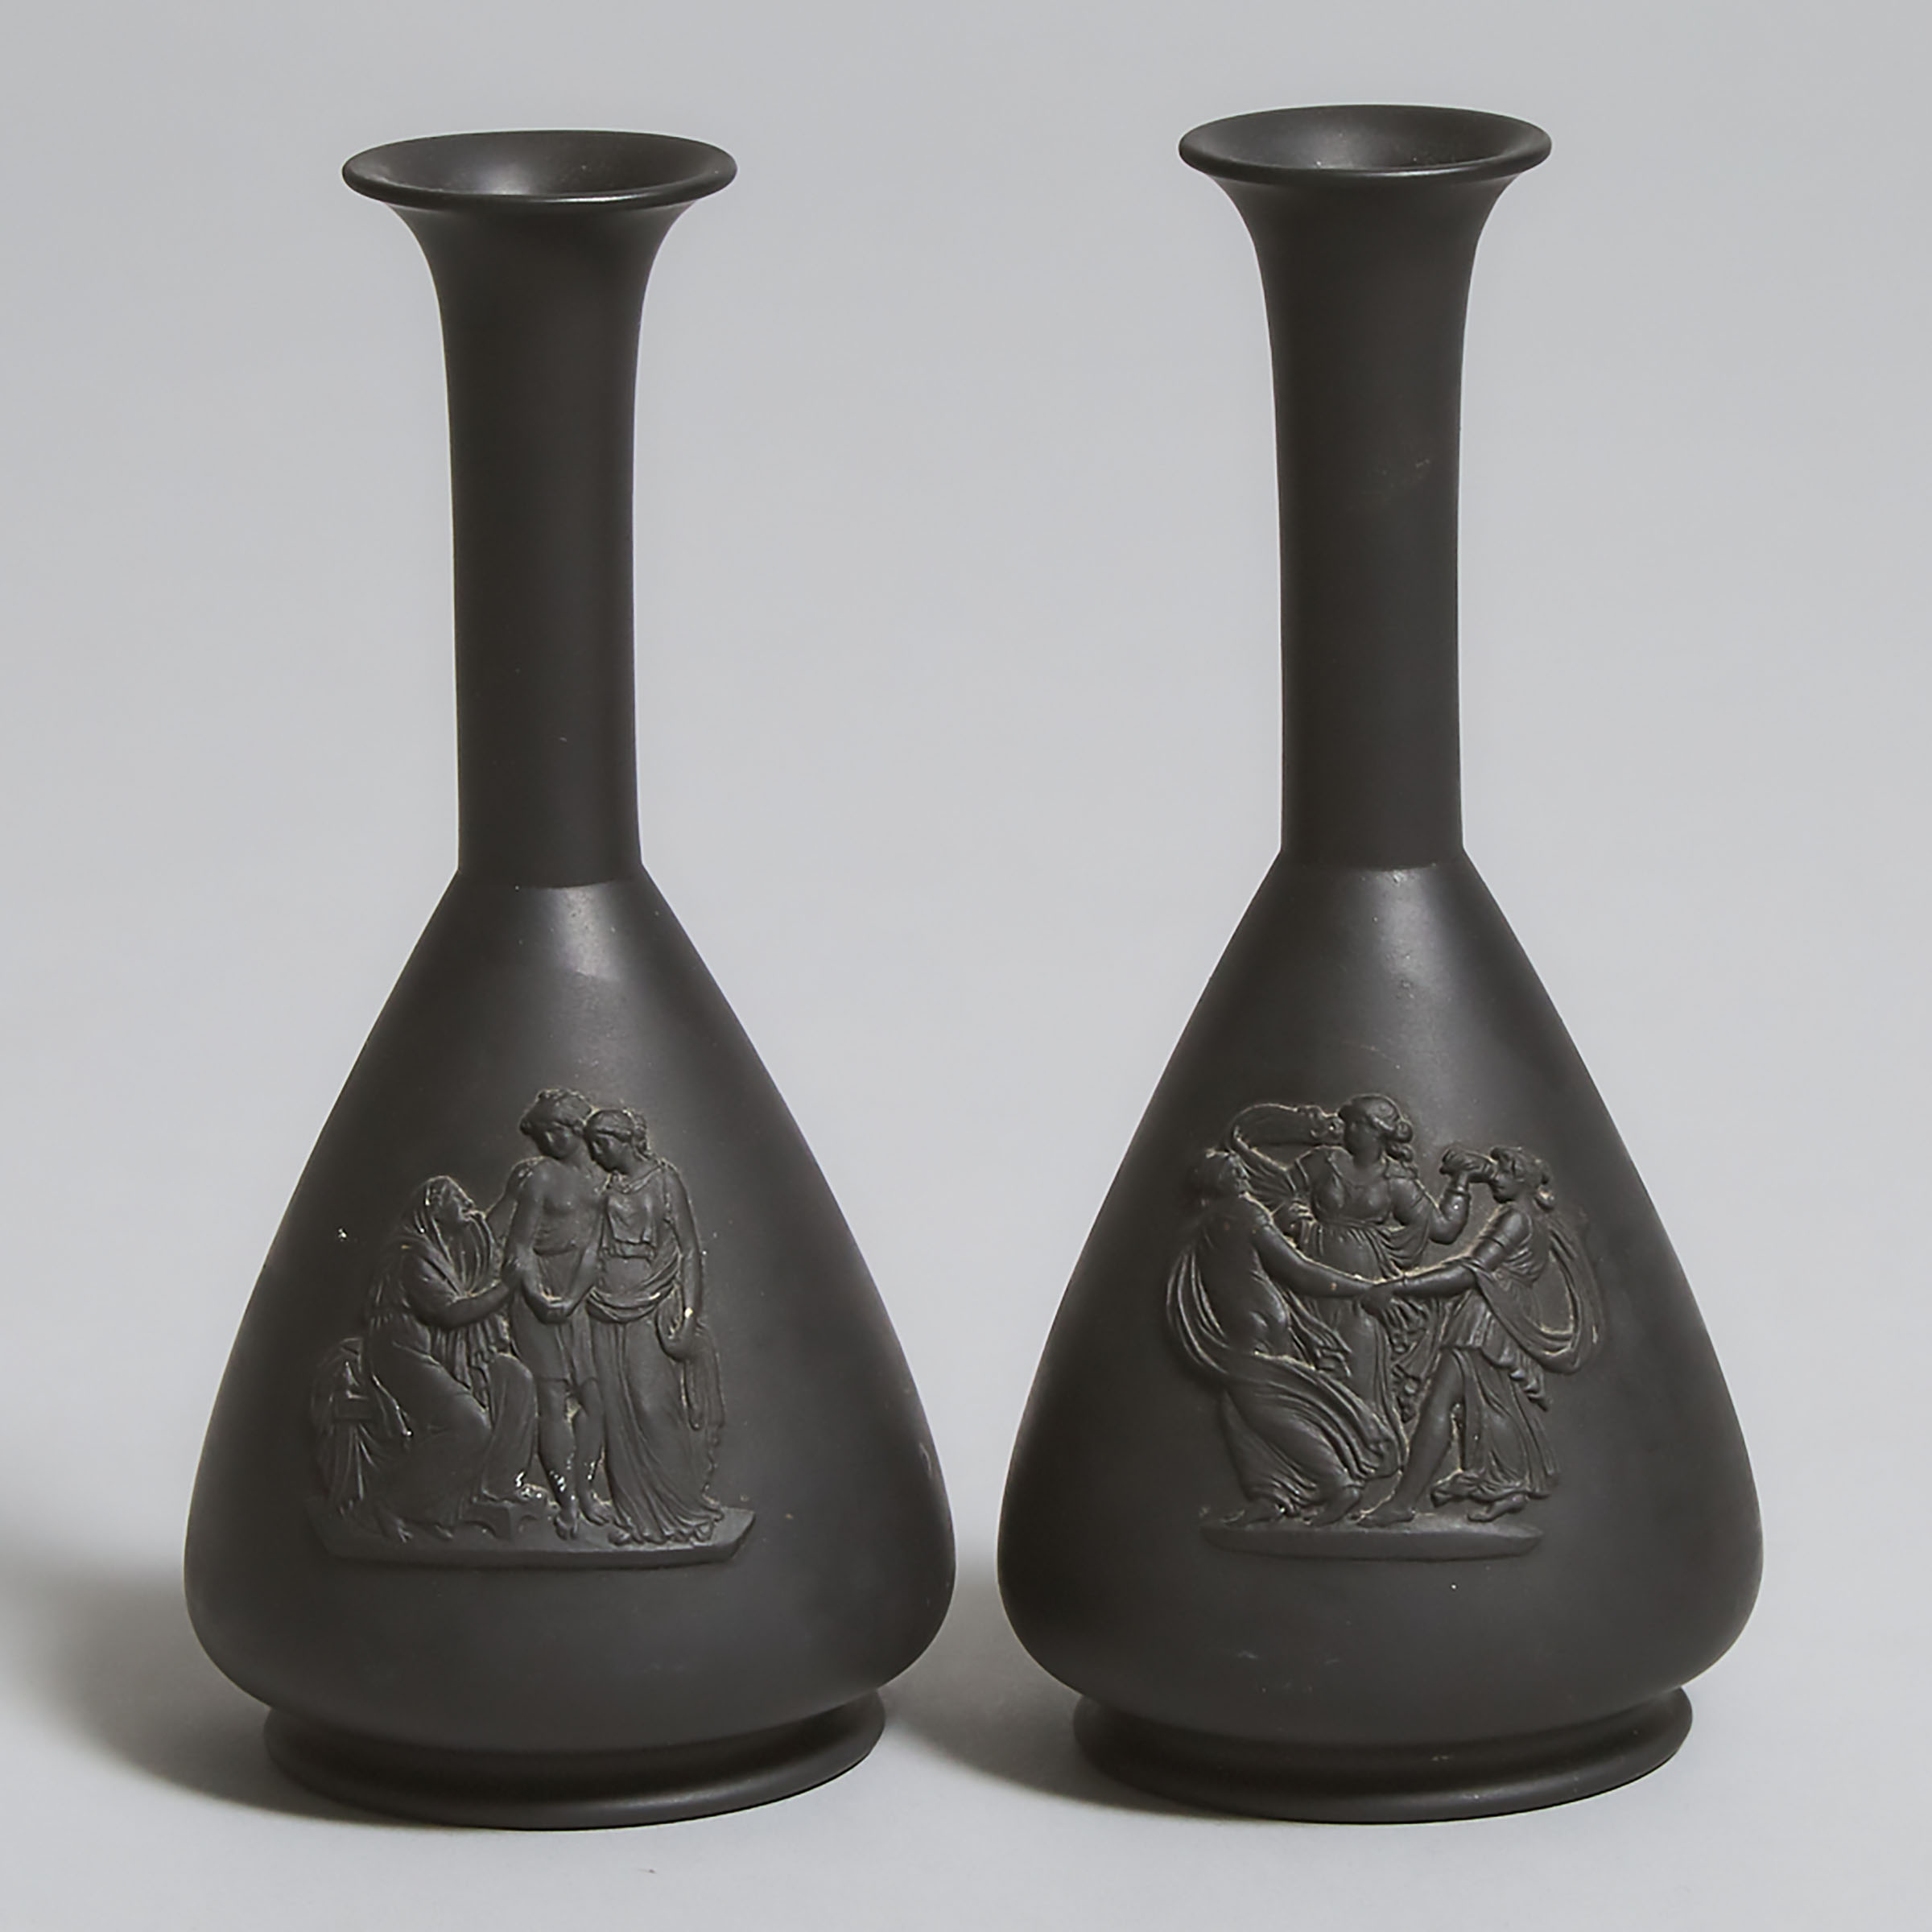 Pair of Wedgwood Black Basalt Bud Vases, late 19th century